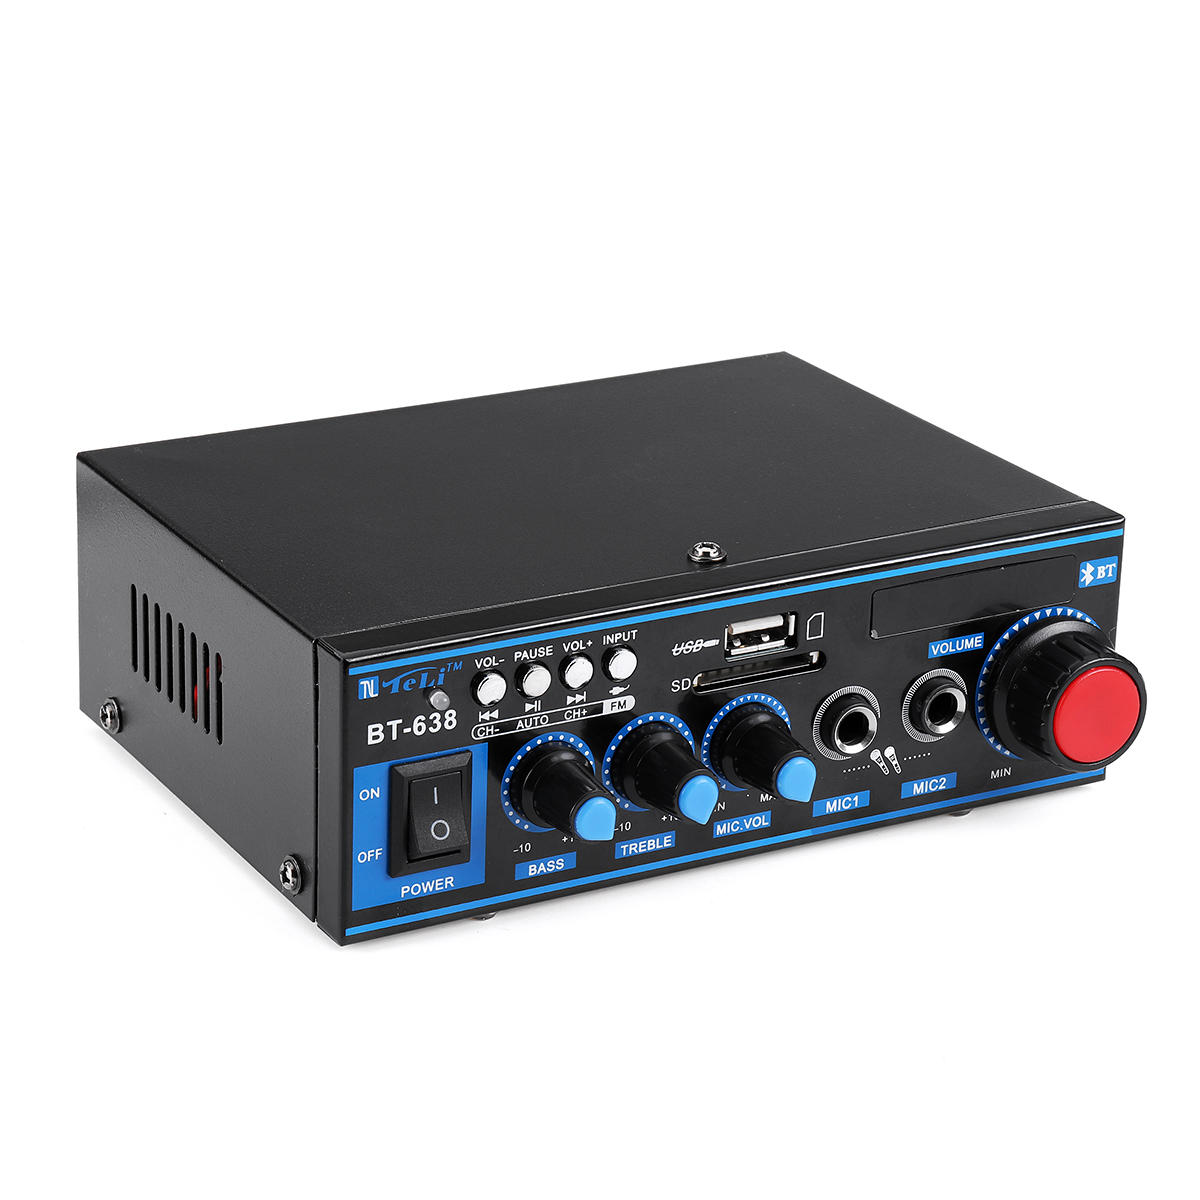 Amplificator cu bluetooth , usb , sd card , 2 intrari microfon , corector de ton si volum , radio fm , telecomanda